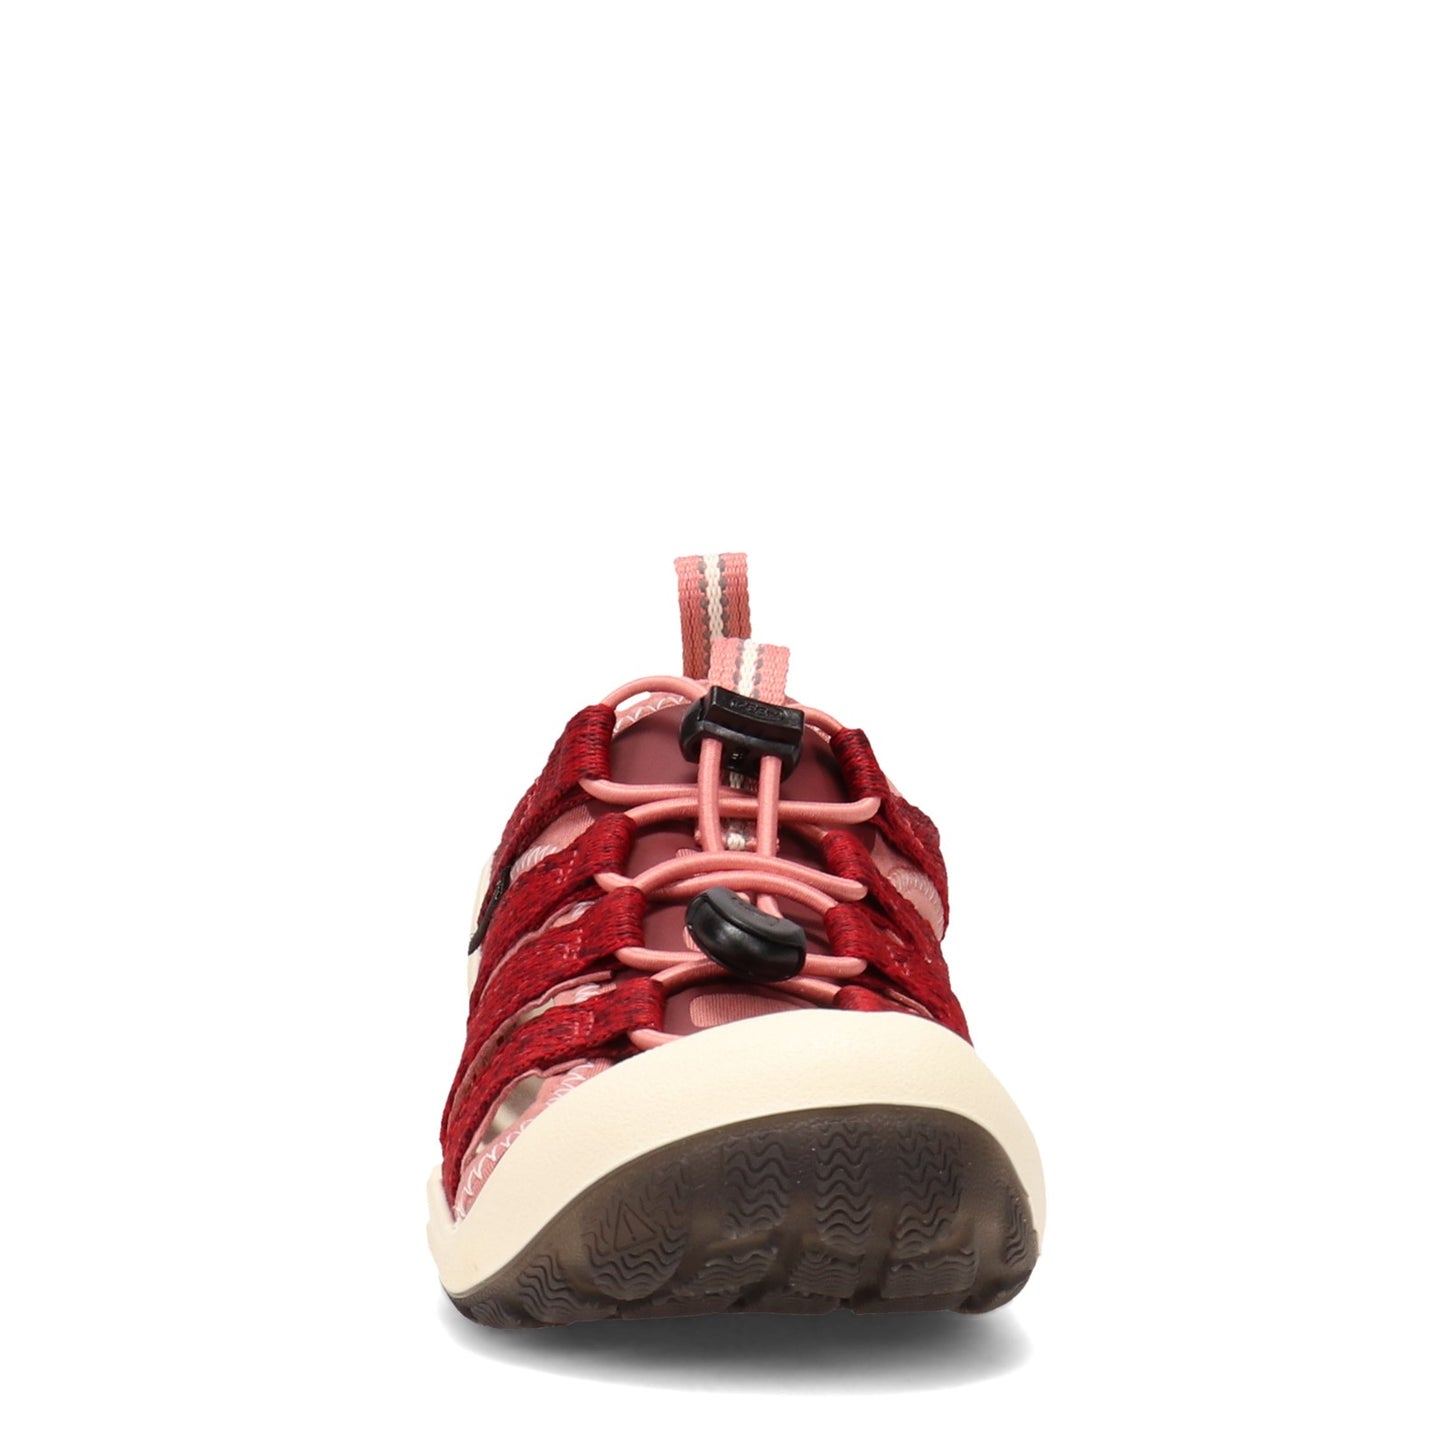 Peltz Shoes  Women's Keen Clearwater II CNX Sandal RED PINK 1024975